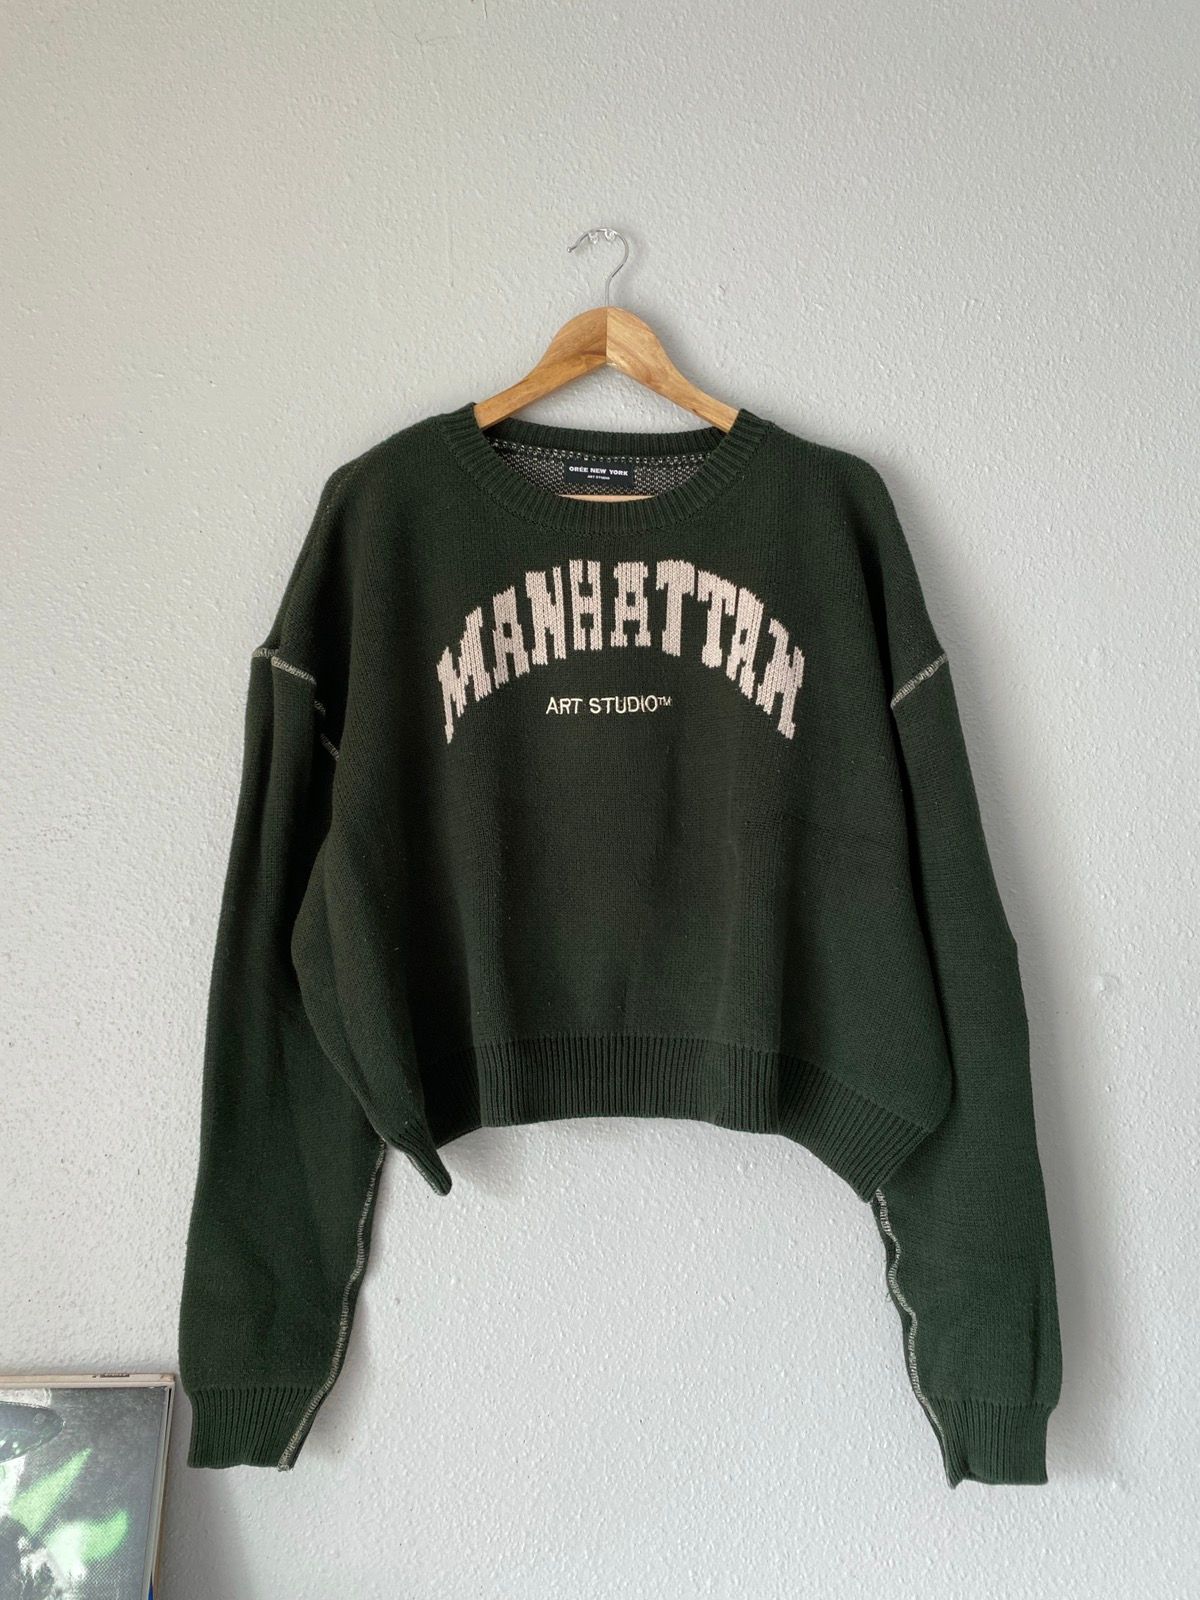 Oree New York Orée New York Manhattan Cropped Sweater Size US M / EU 48-50 / 2 - 1 Preview